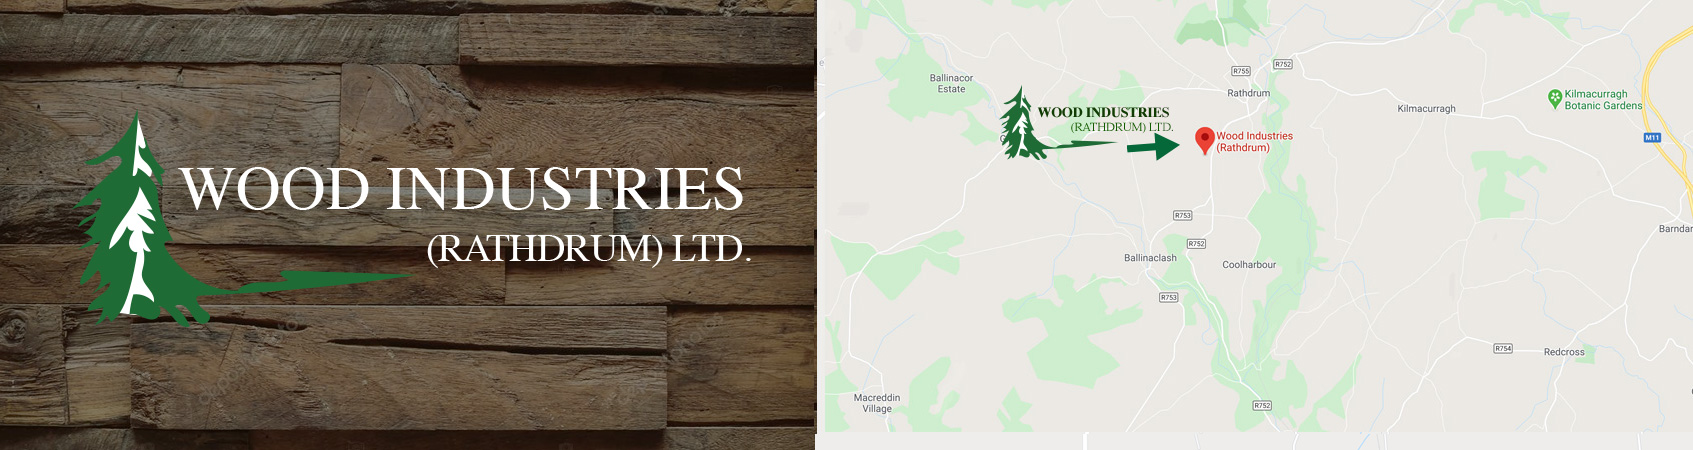 Wood Industries (Rathdrum) Ltd.